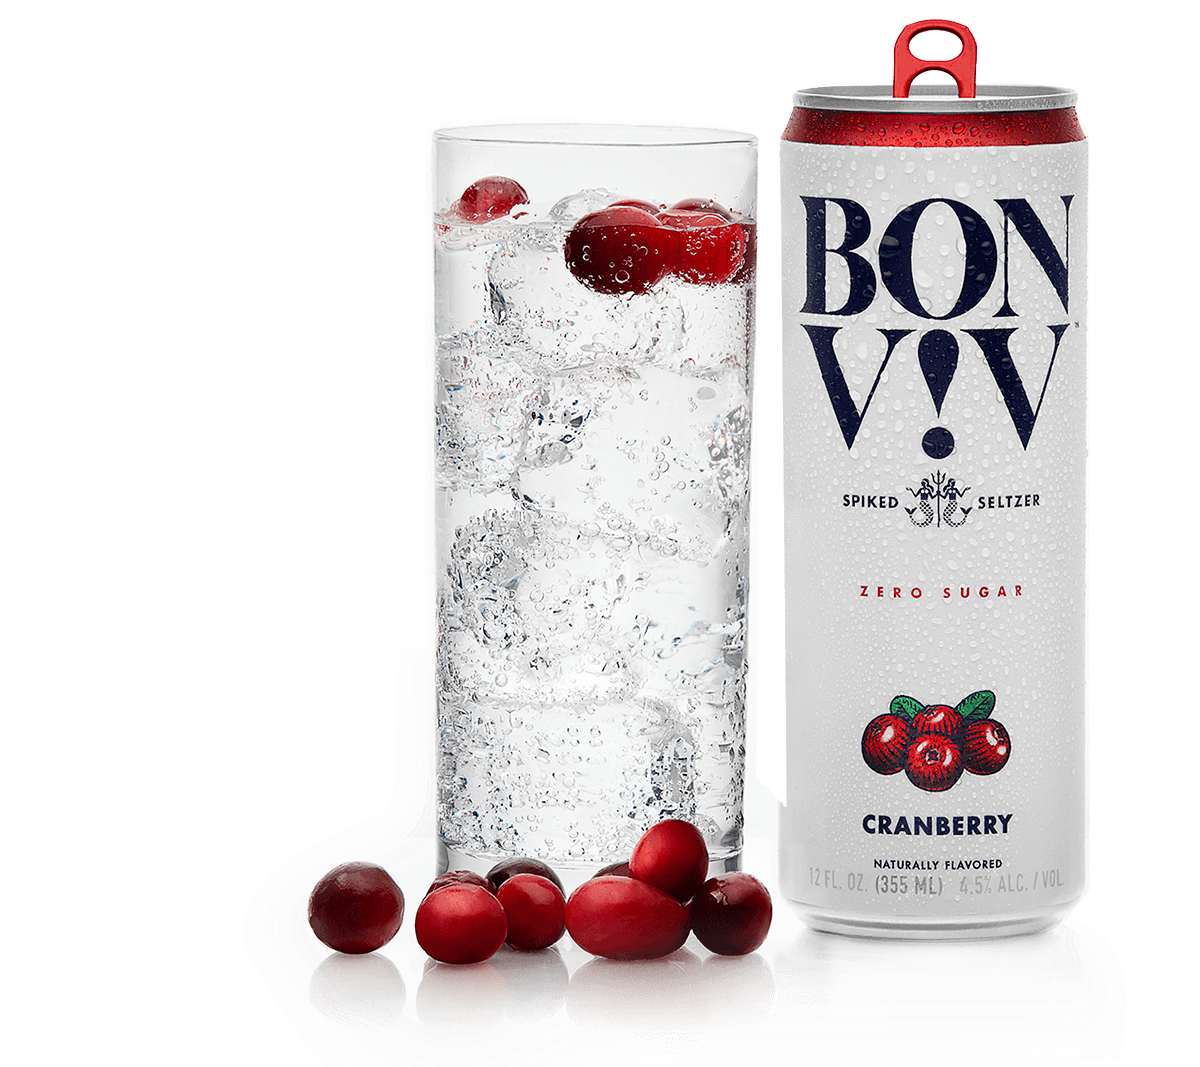 Bon & Viv Spiked Seltzer Cranberry ABV 4.5% 6 Pack